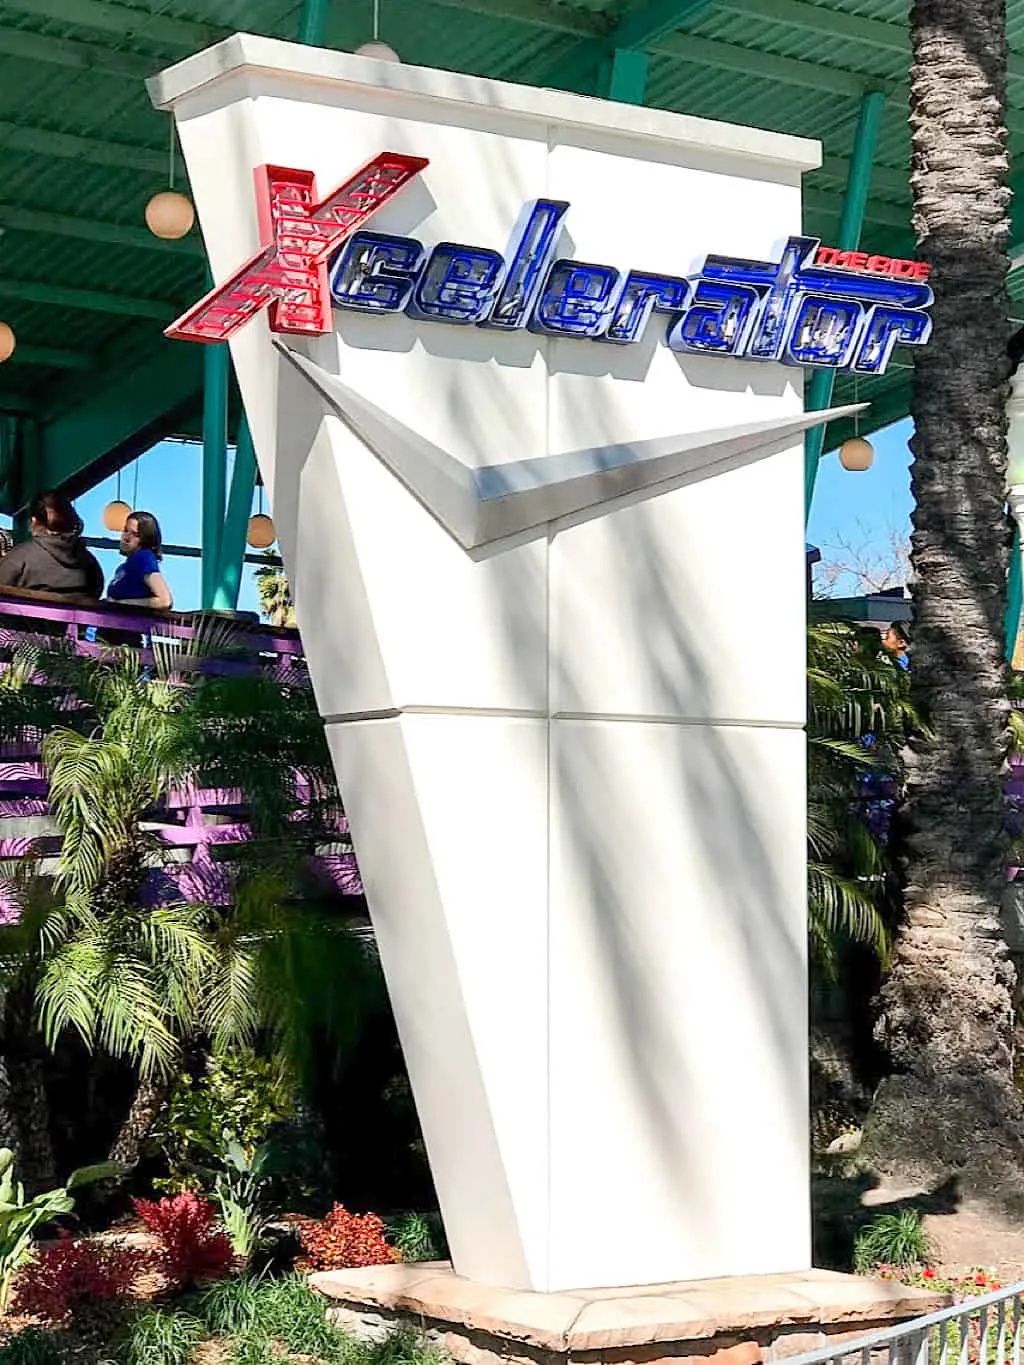 Xcelerator Roller Coaster Knott's Berry Farm Buena Park Caliornia